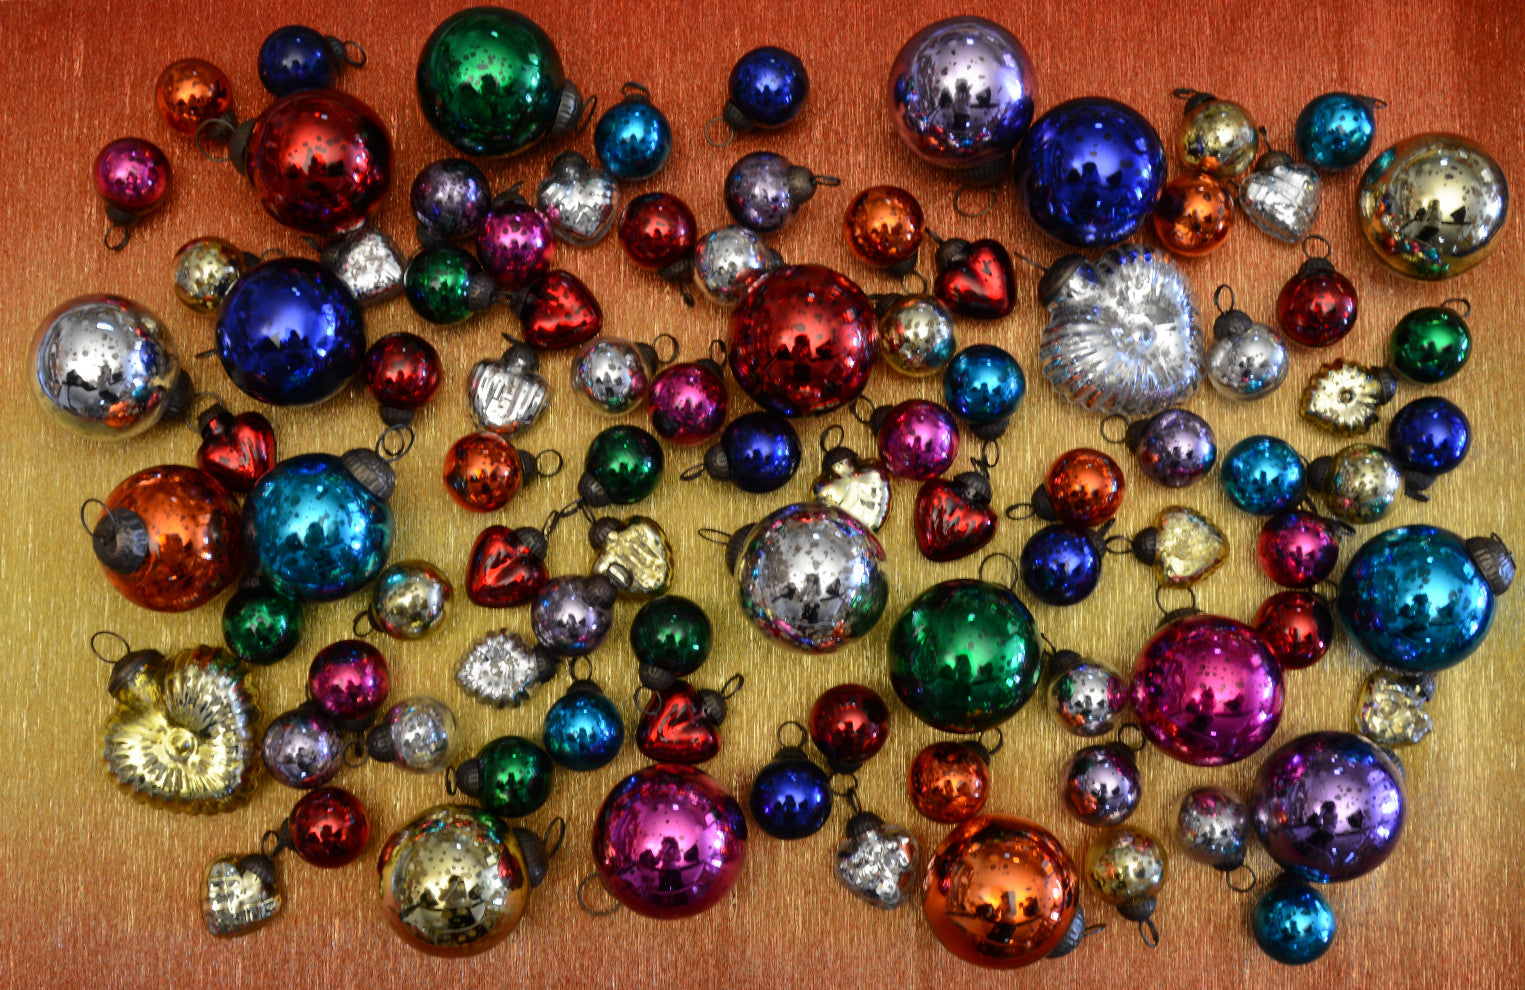 BLOWOUT (60 PACK) 6 Pack | 1.5" Orange Ava Mini Mercury Handcrafted Glass Balls Ornaments Christmas Tree Decoration